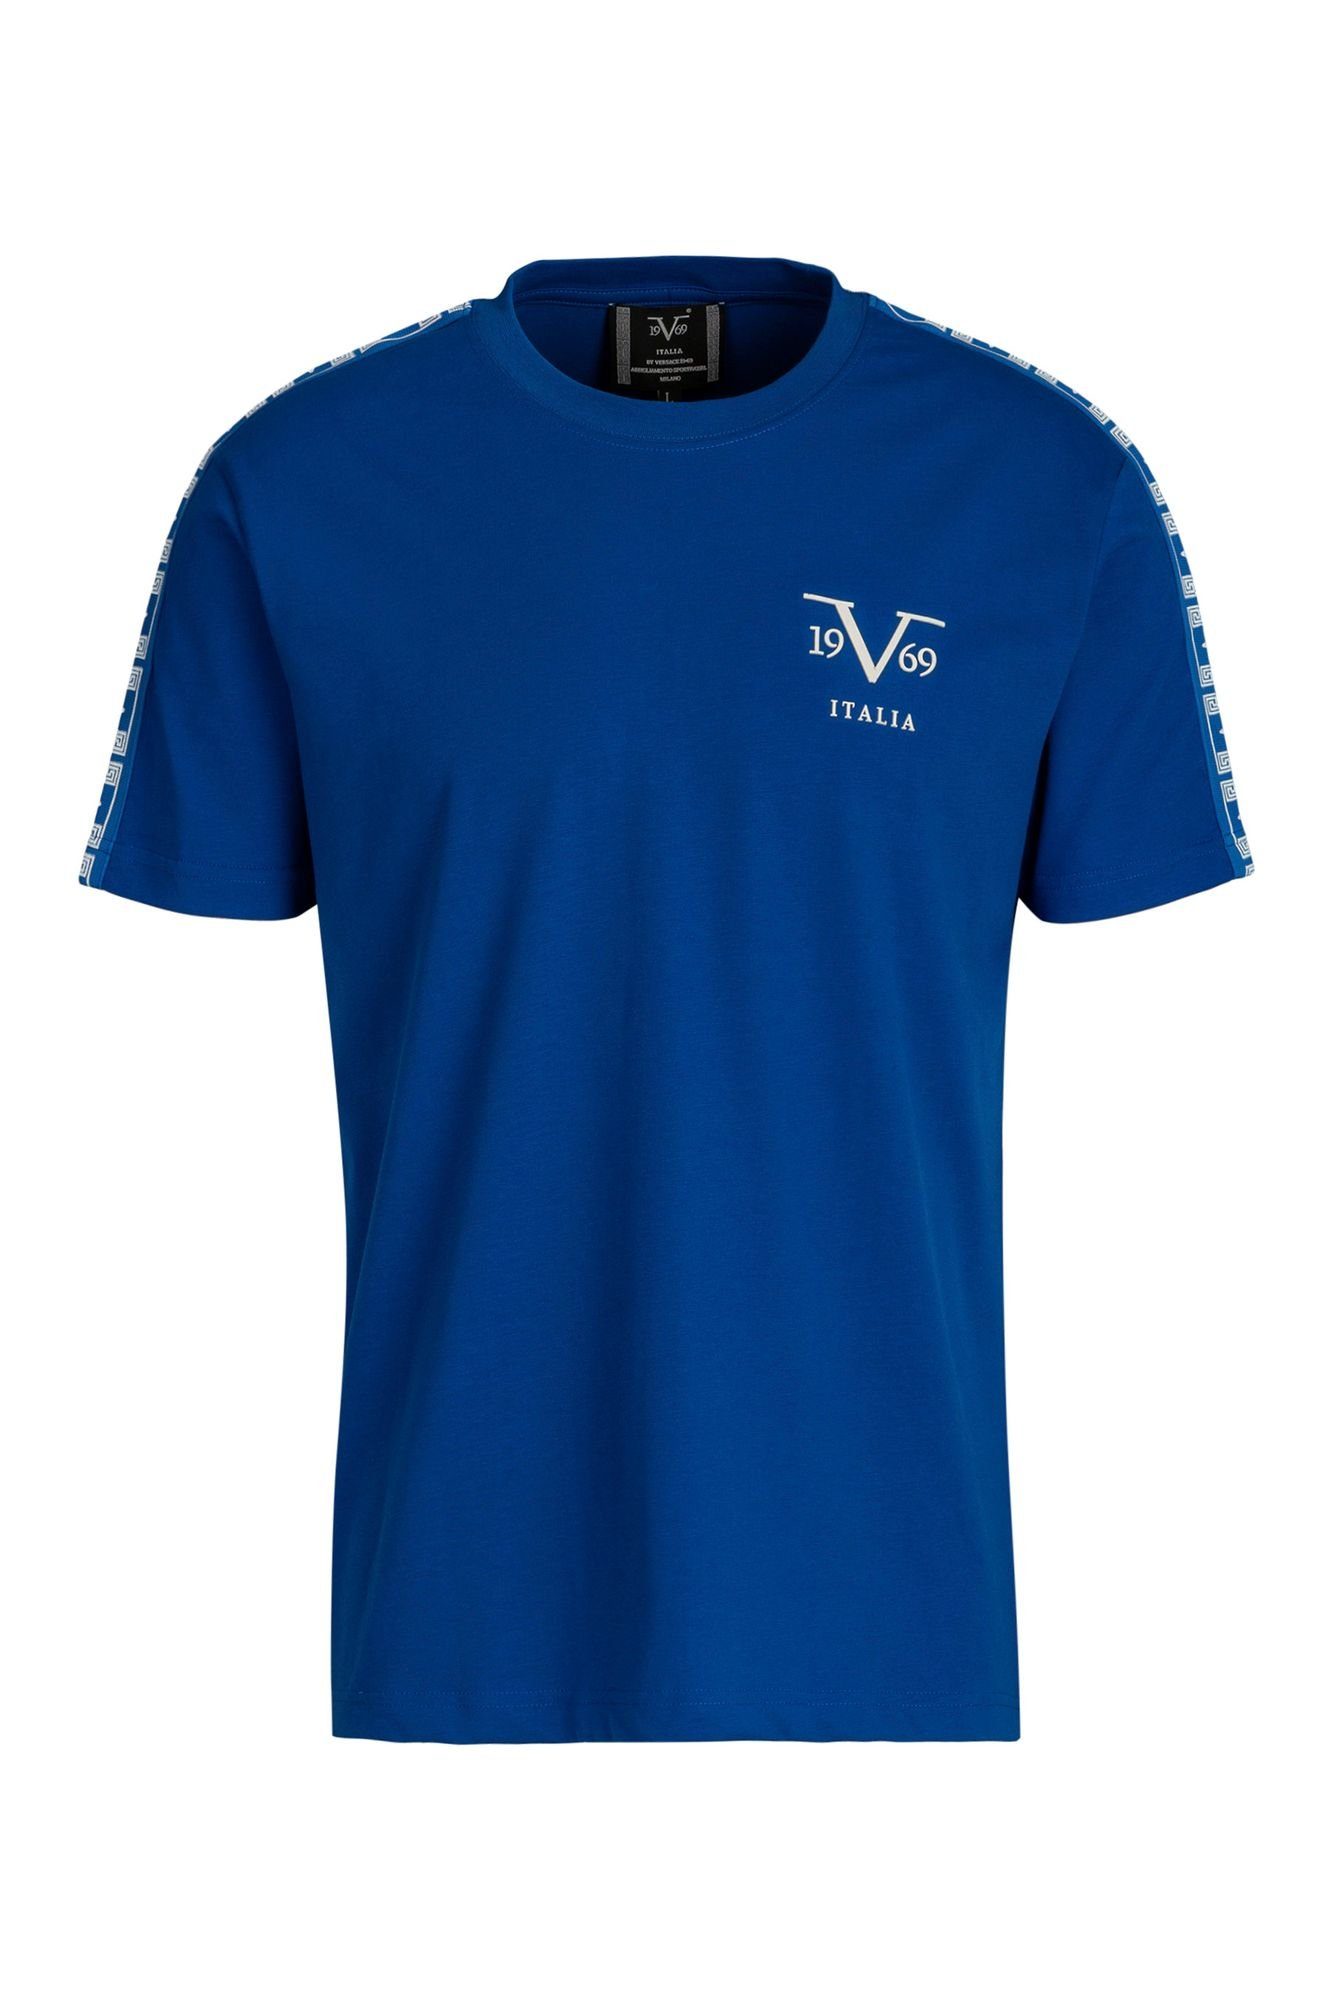 19V69 Italia by Versace T-Shirt Fabio